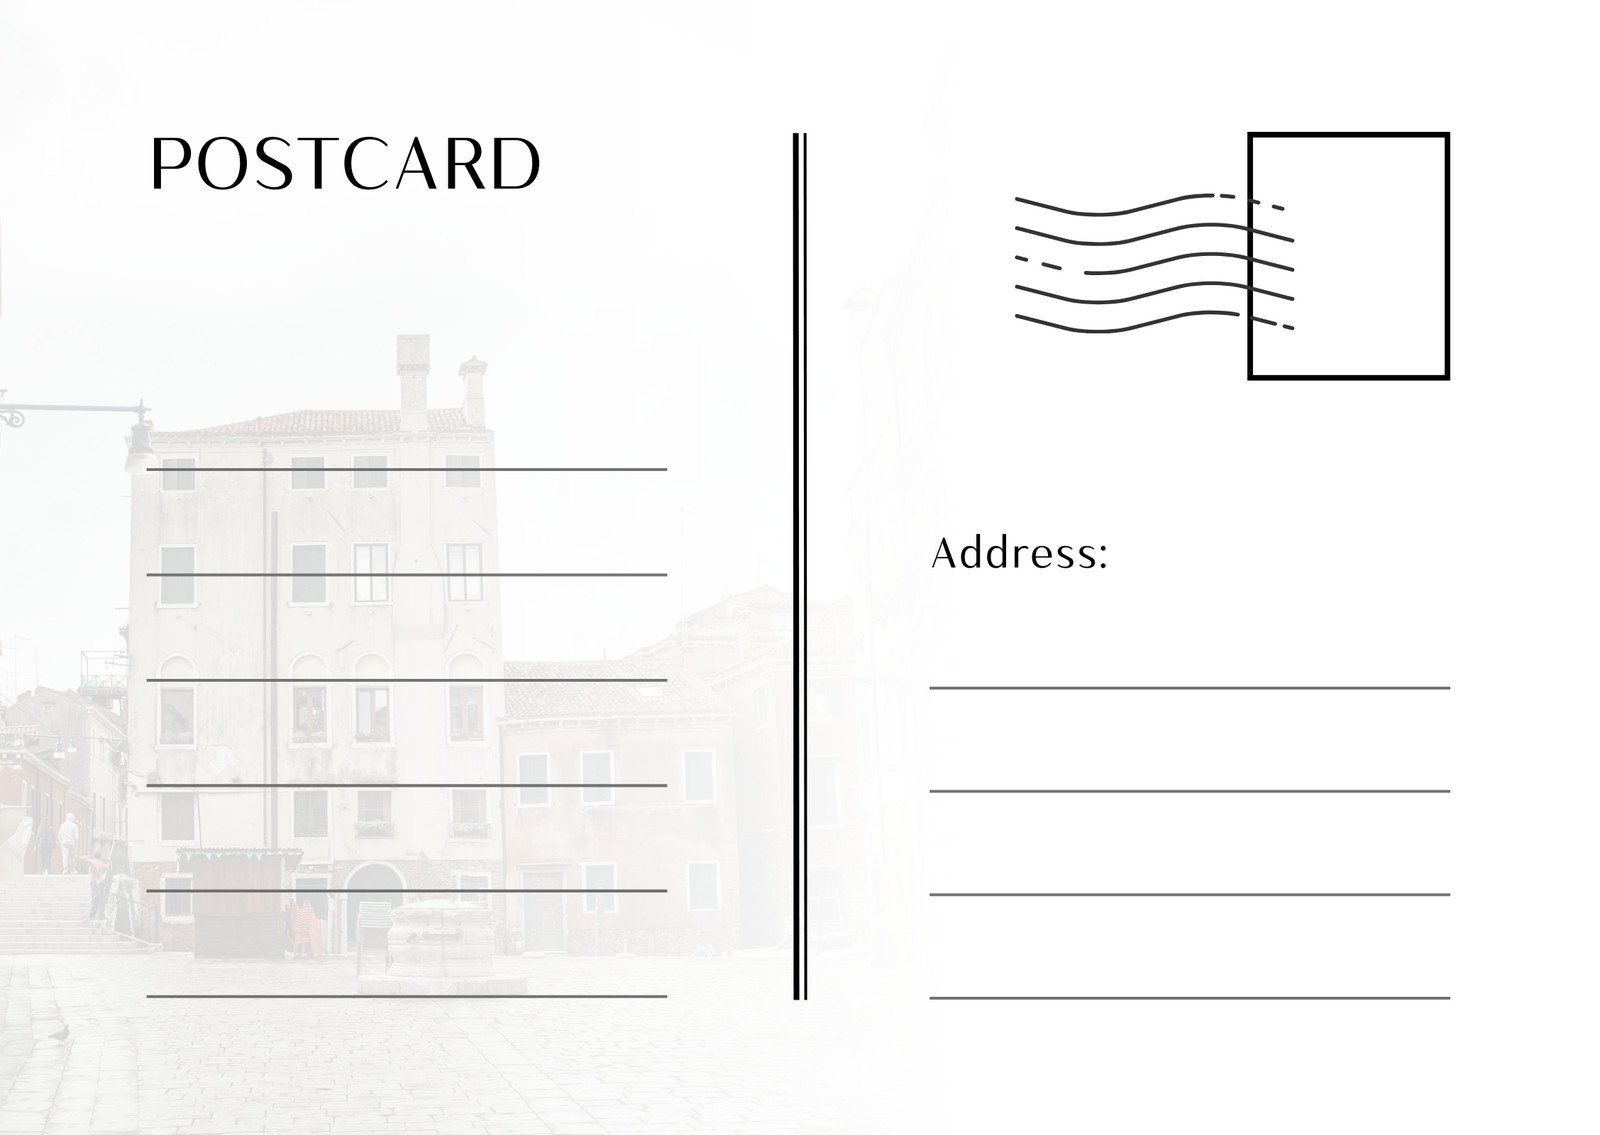 Postcards - Design & Print Custom Postcards Online